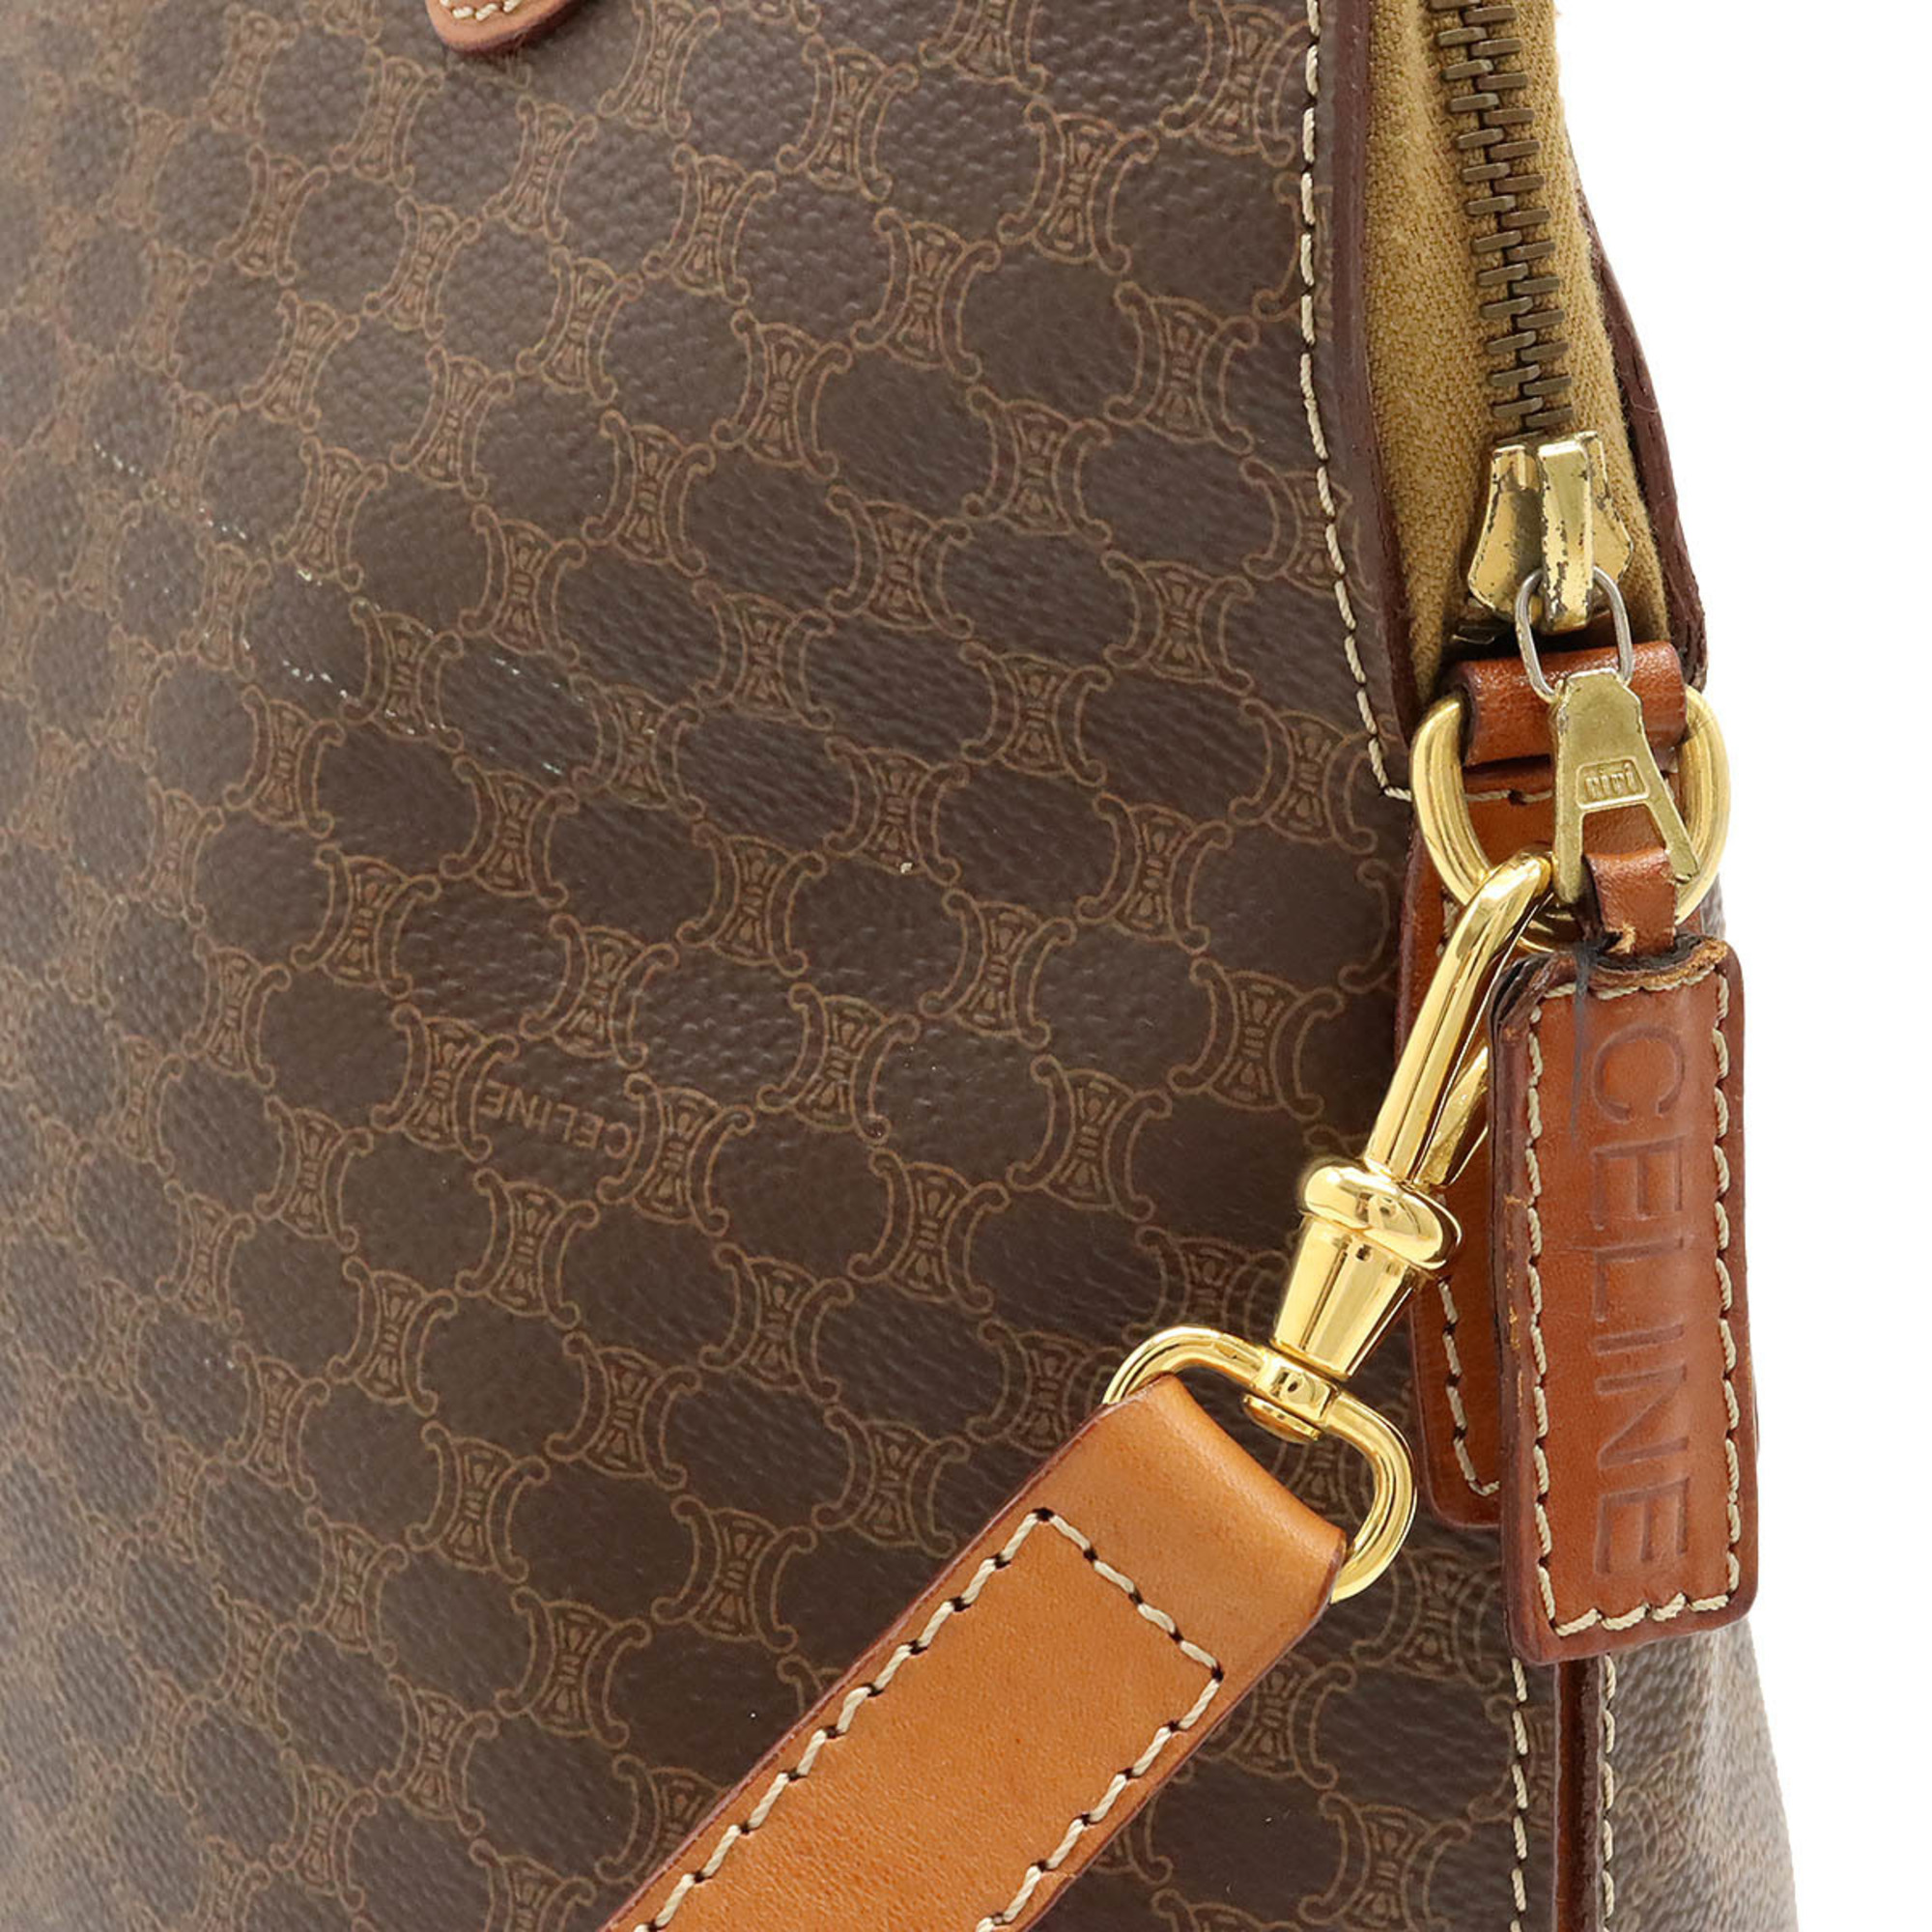 CELINE Macadam pattern handbag shoulder bag PVC leather dark brown